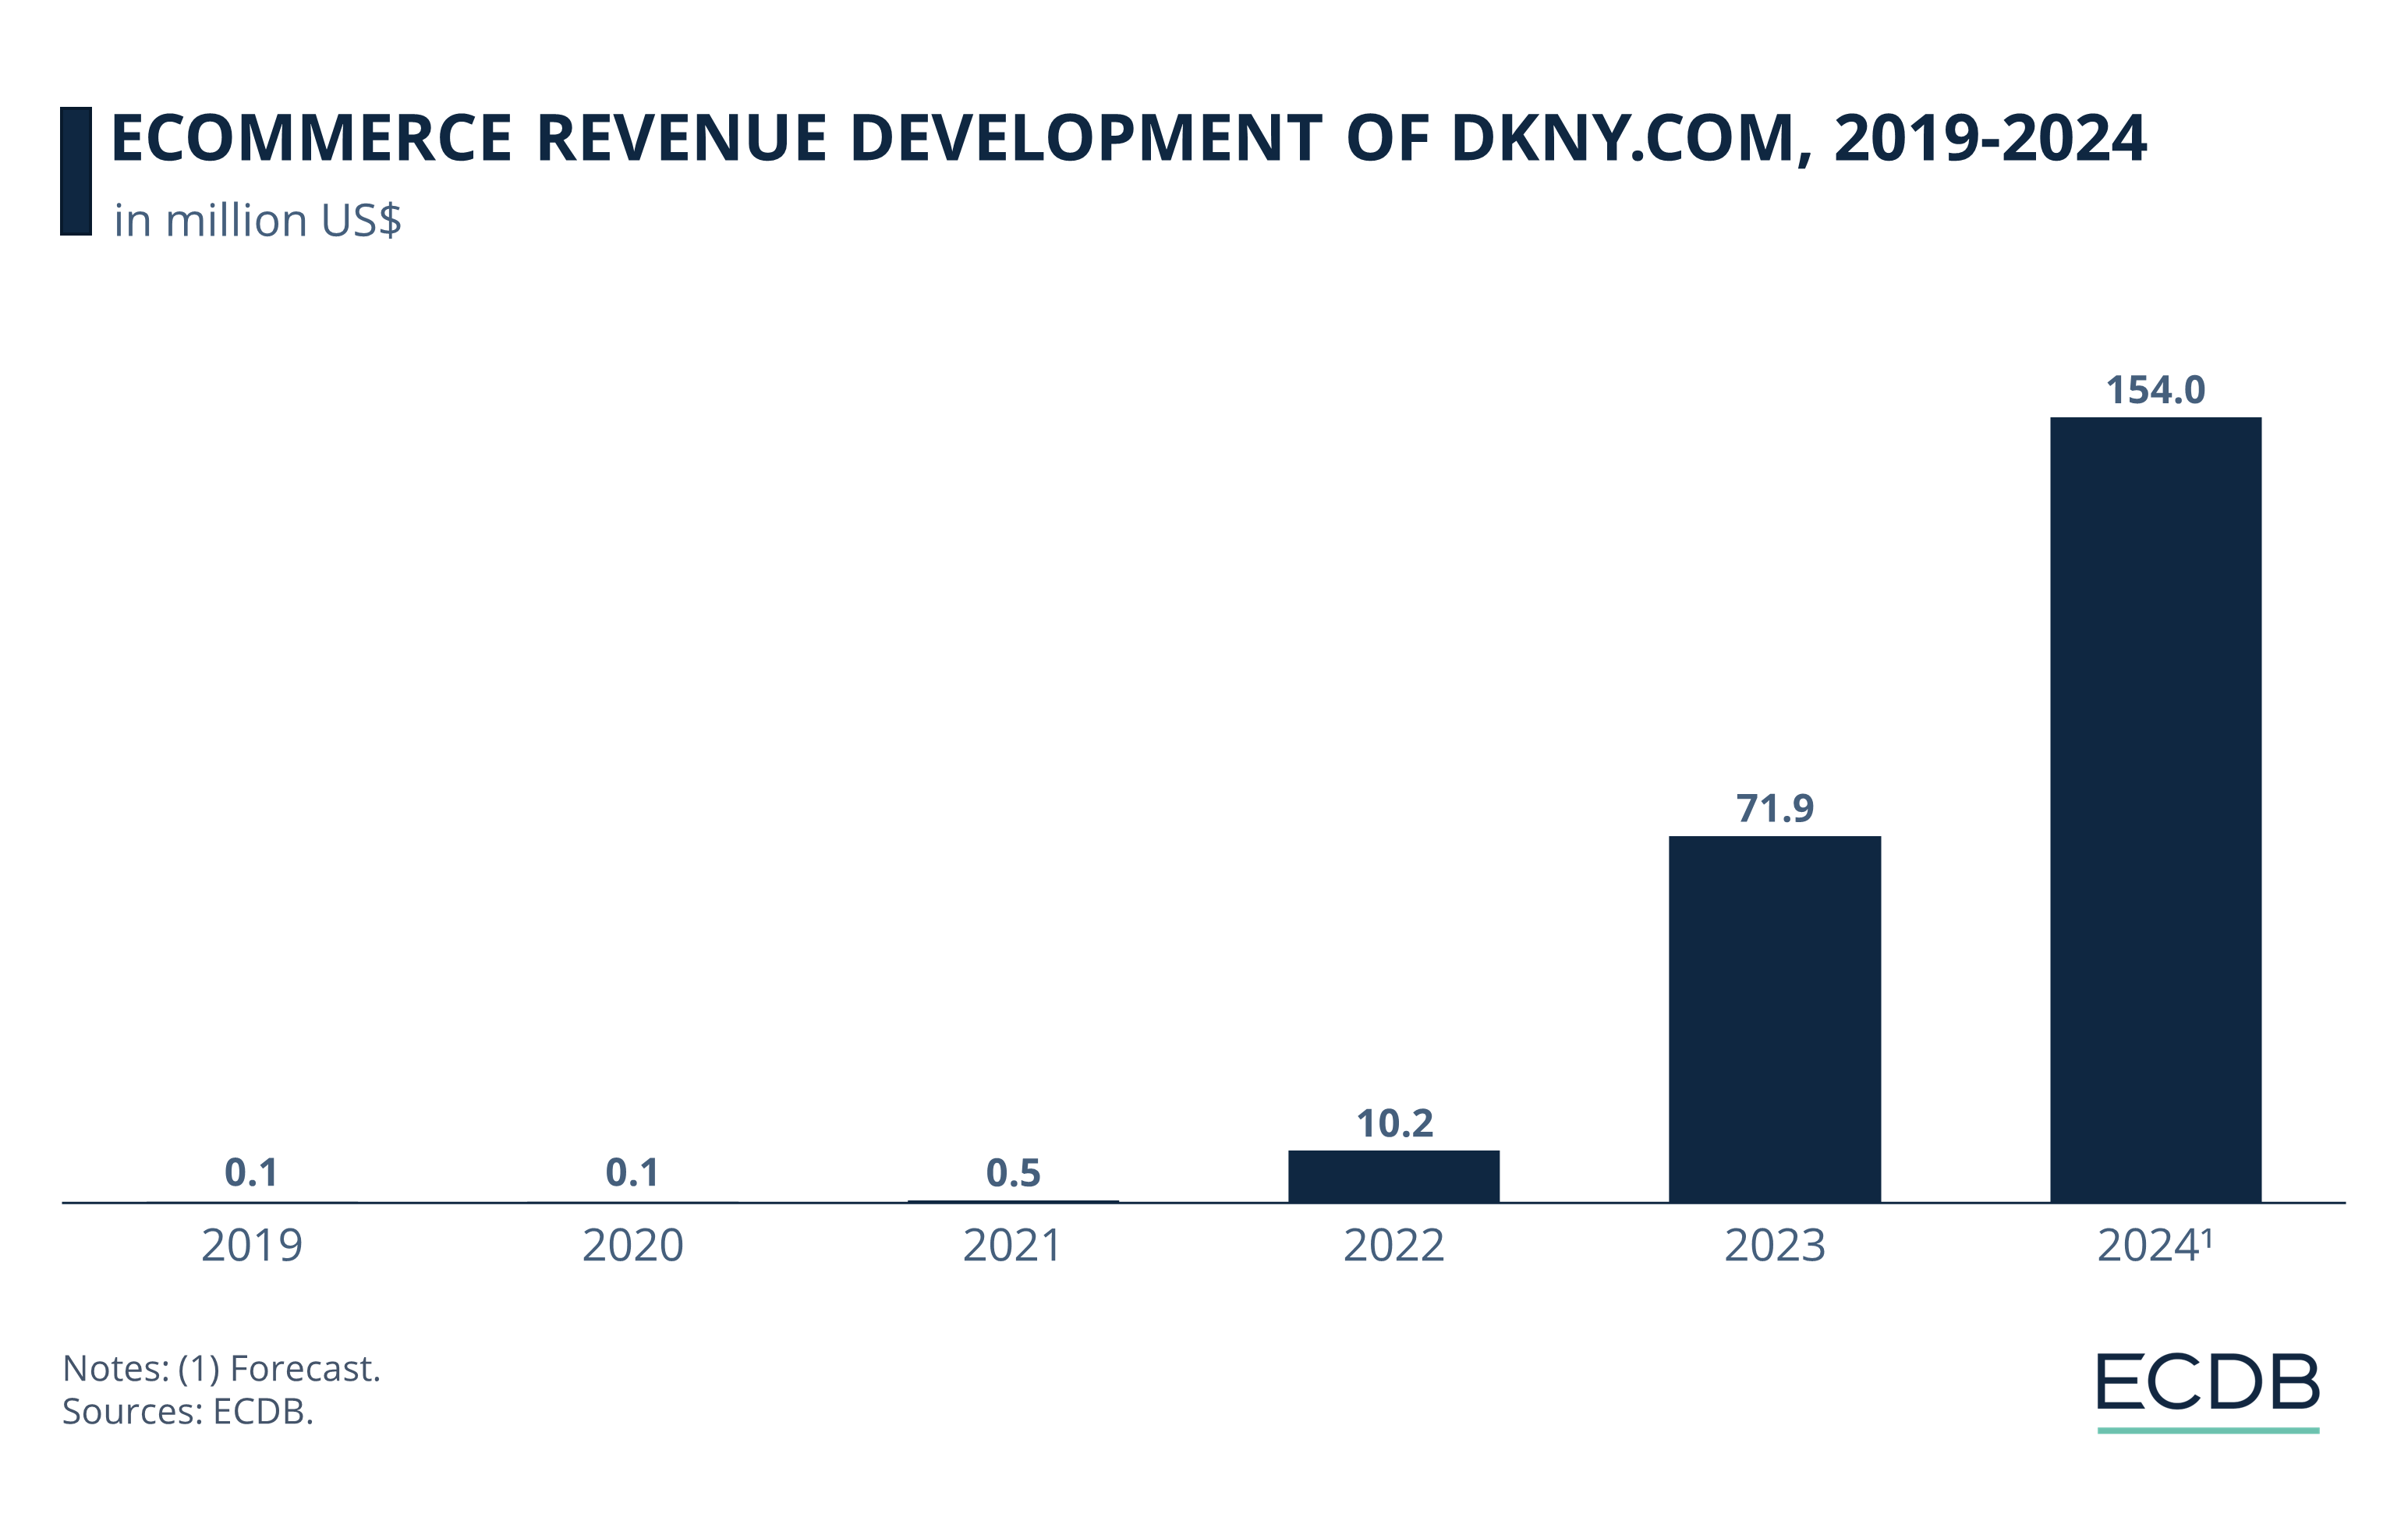 eCommerce Revenue Development of DKNY.com, 2019-2024